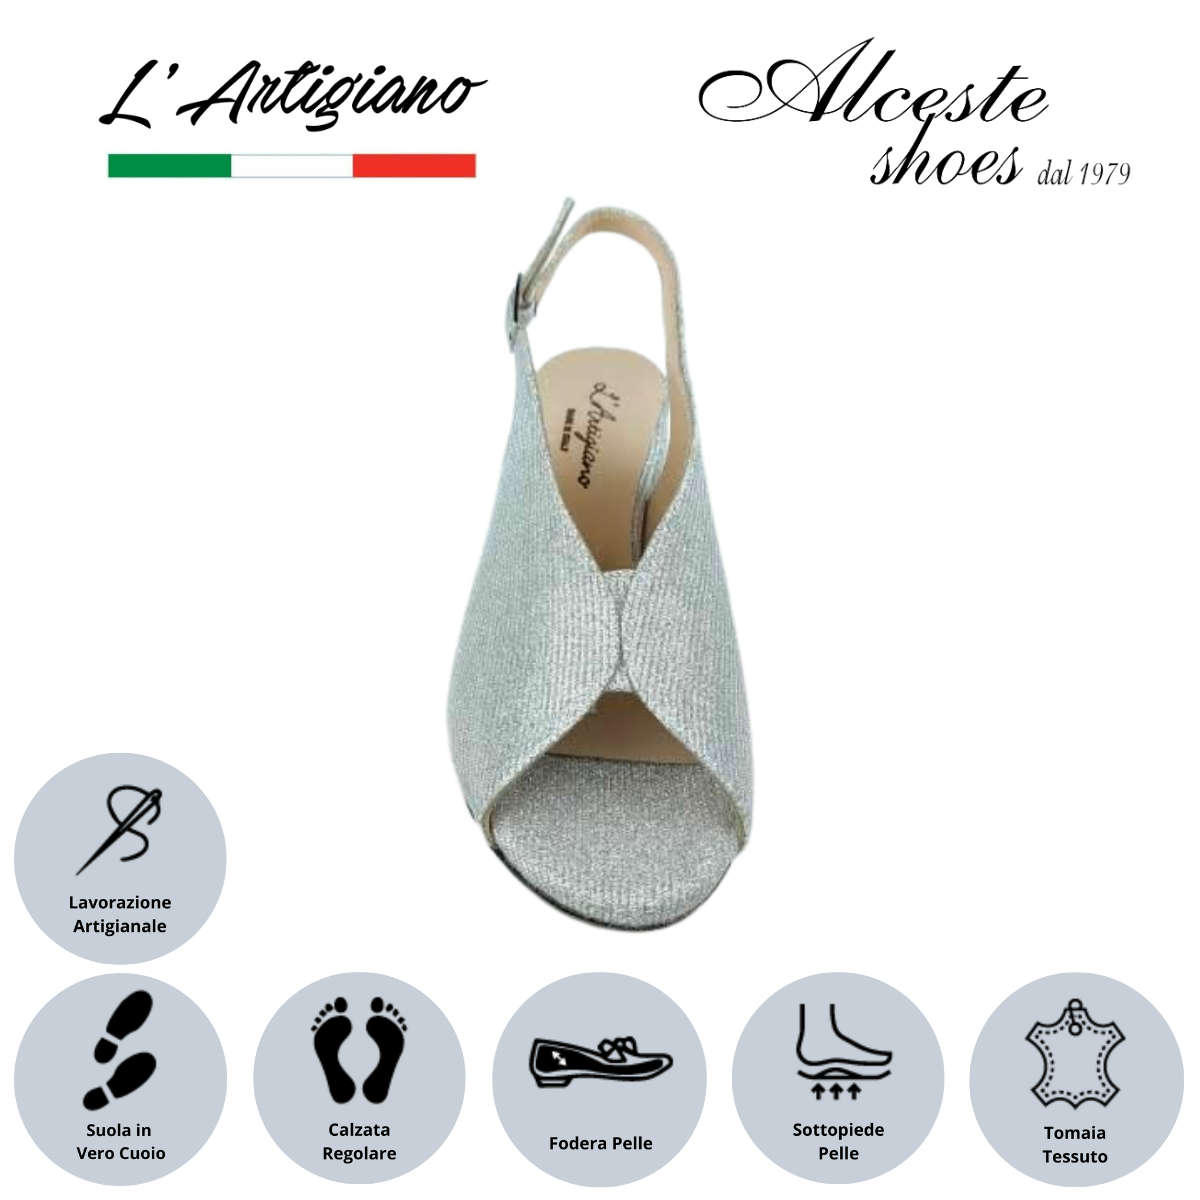 Sandalo Donna "L'Artigiano" Art. 125 Tessuto Lurex Argento Alceste Shoes 2 1 2